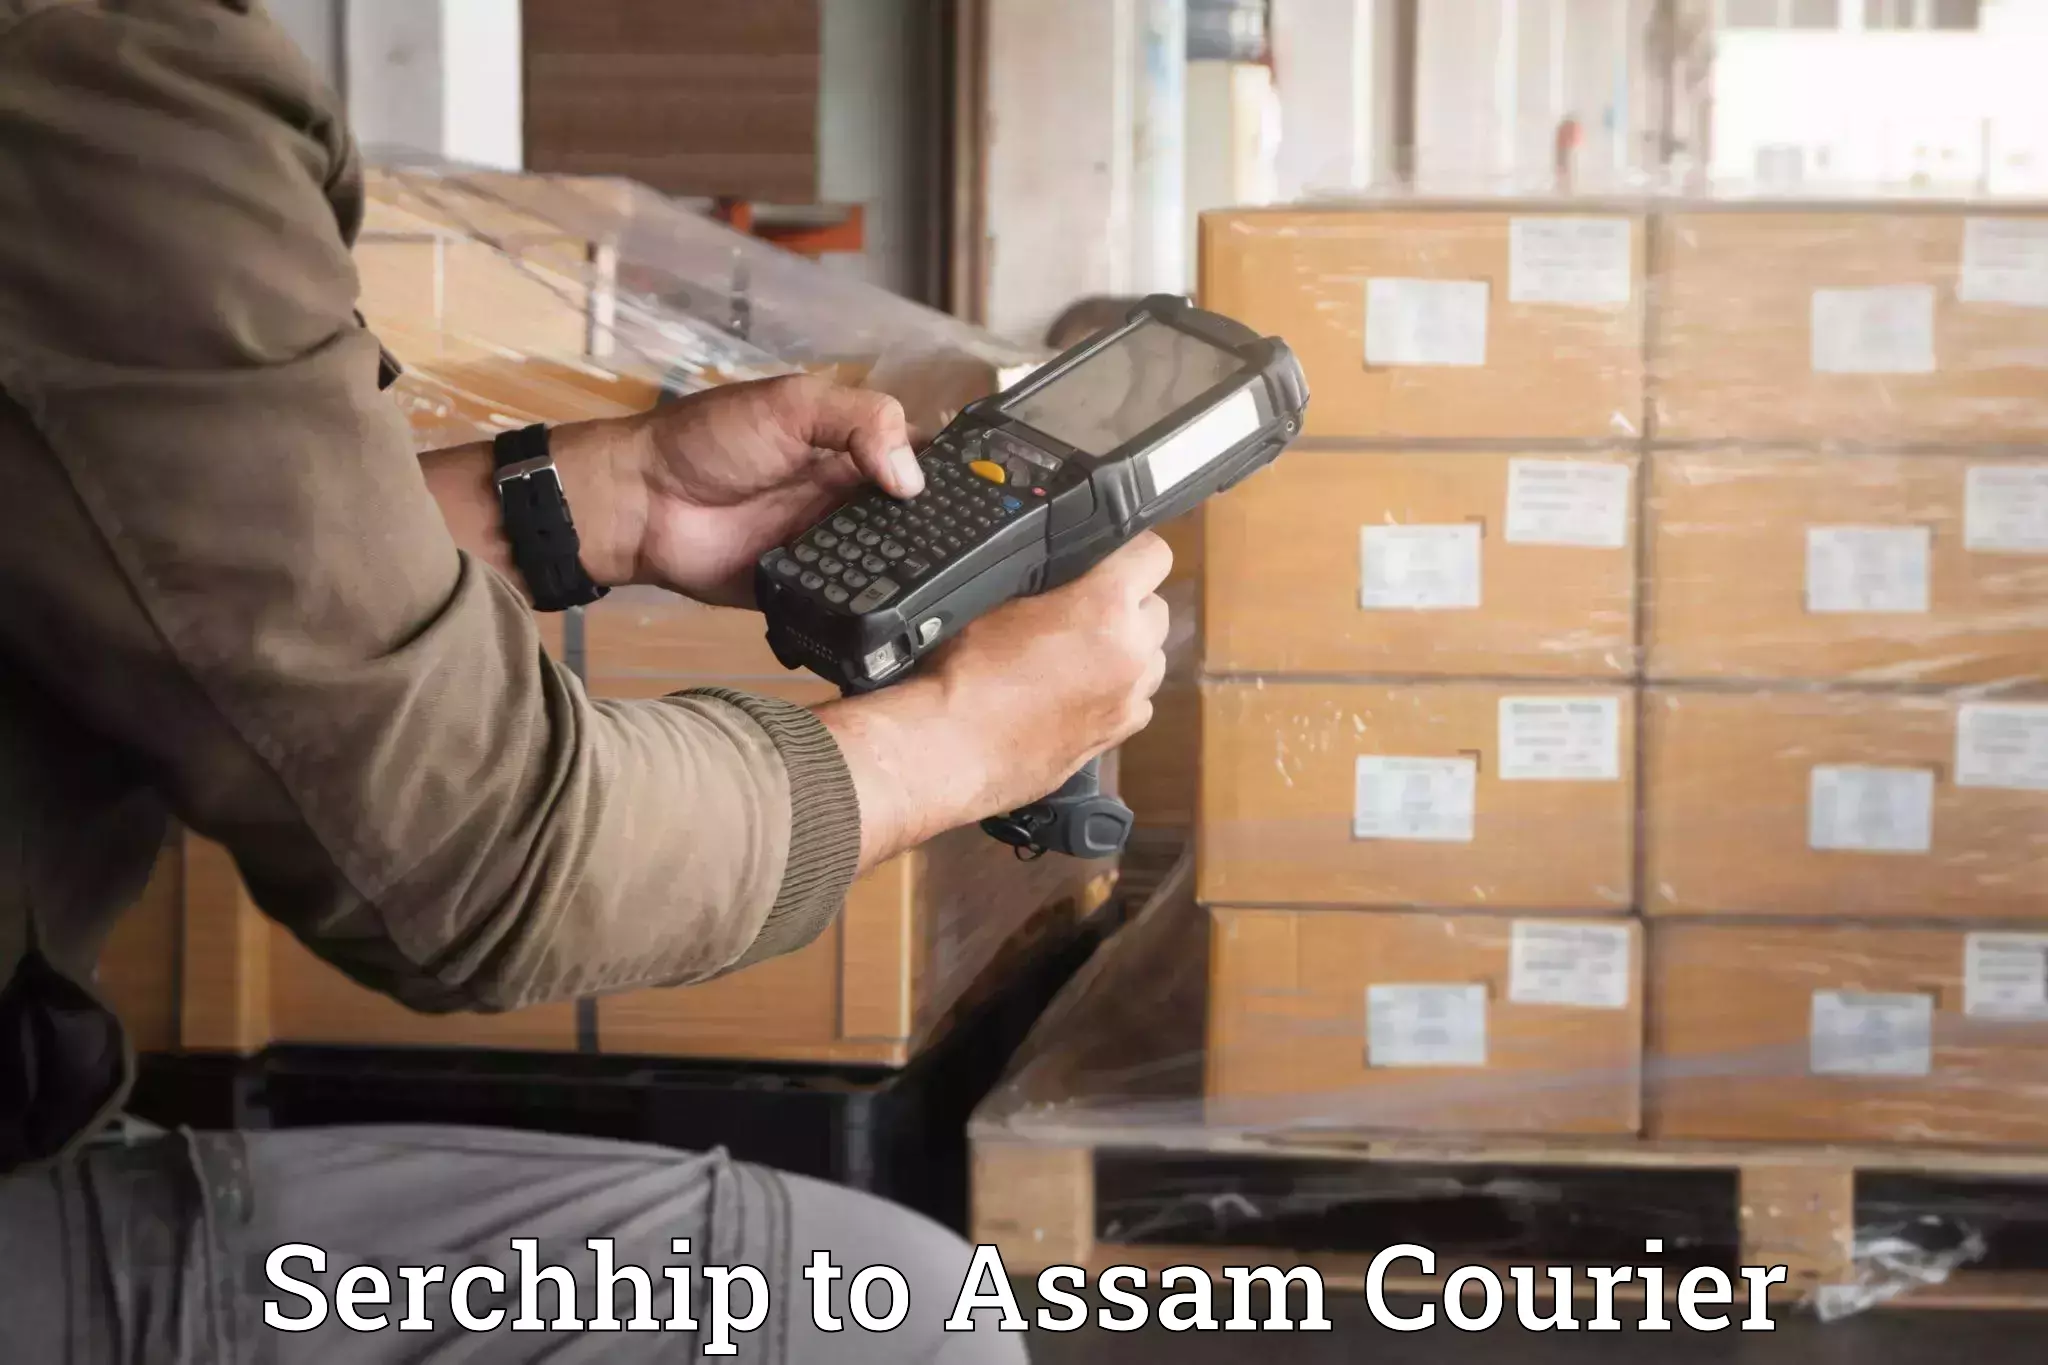 Efficient moving company Serchhip to Assam